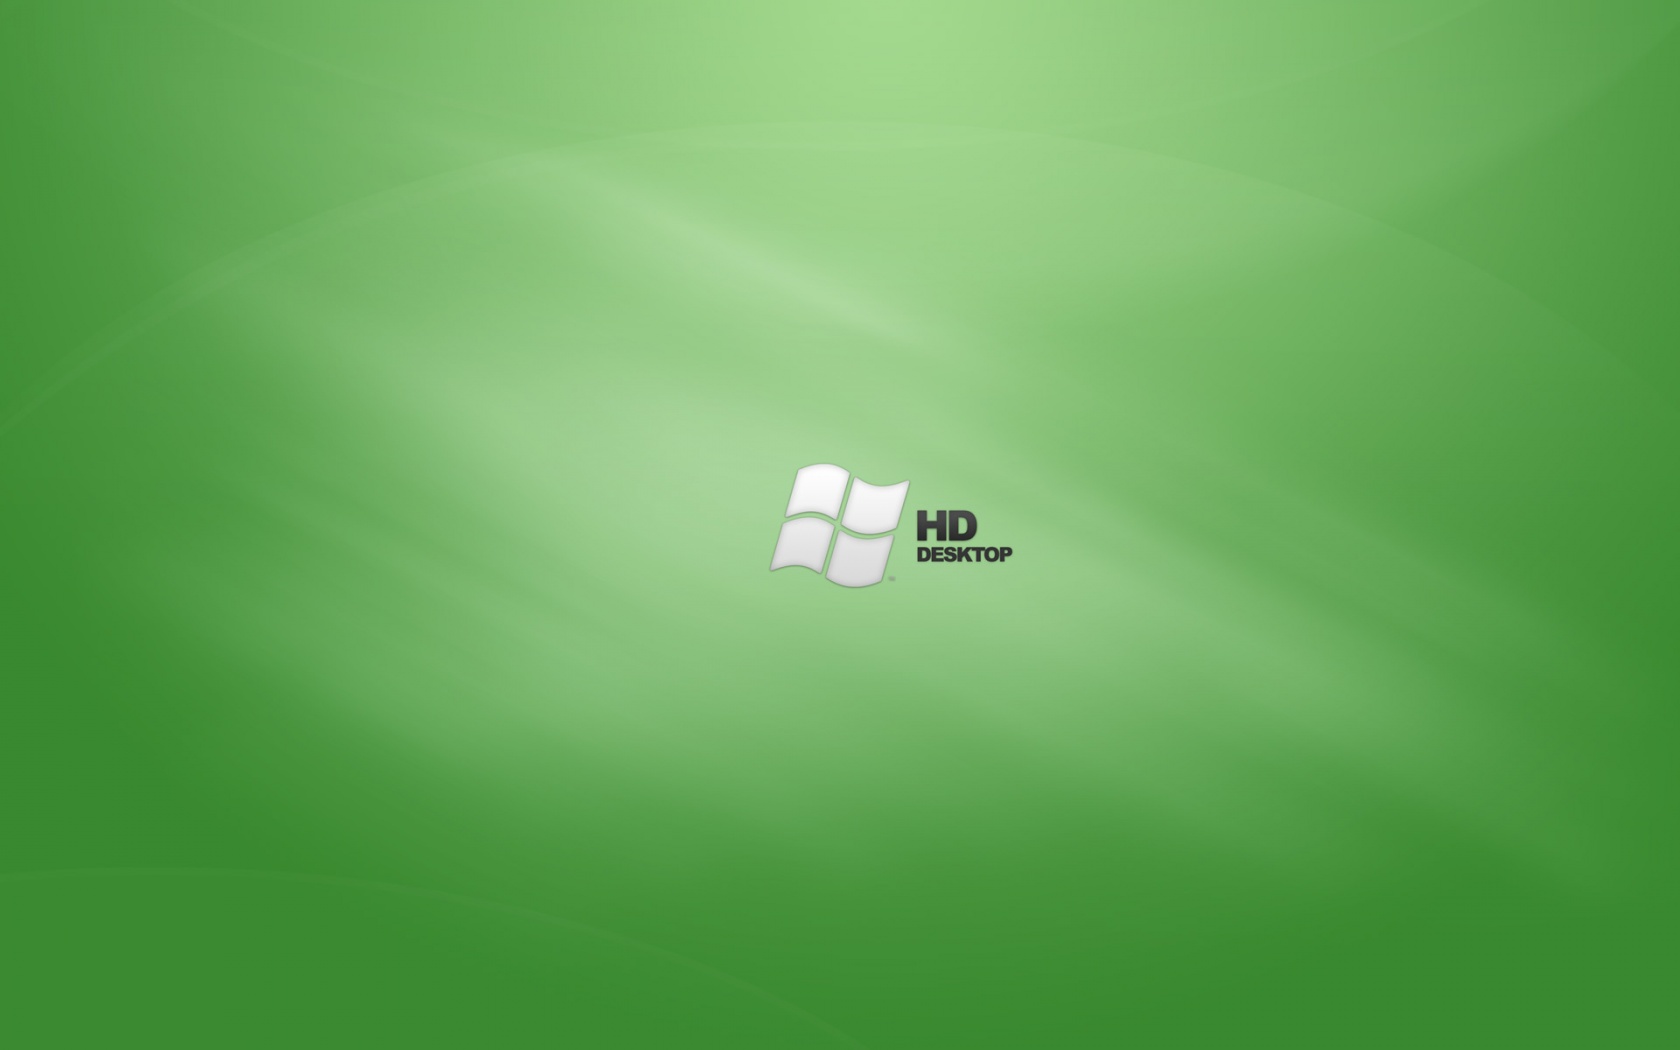 1680x1050 Green HD Desktop desktop PC and Mac wallpaper 1680x1050